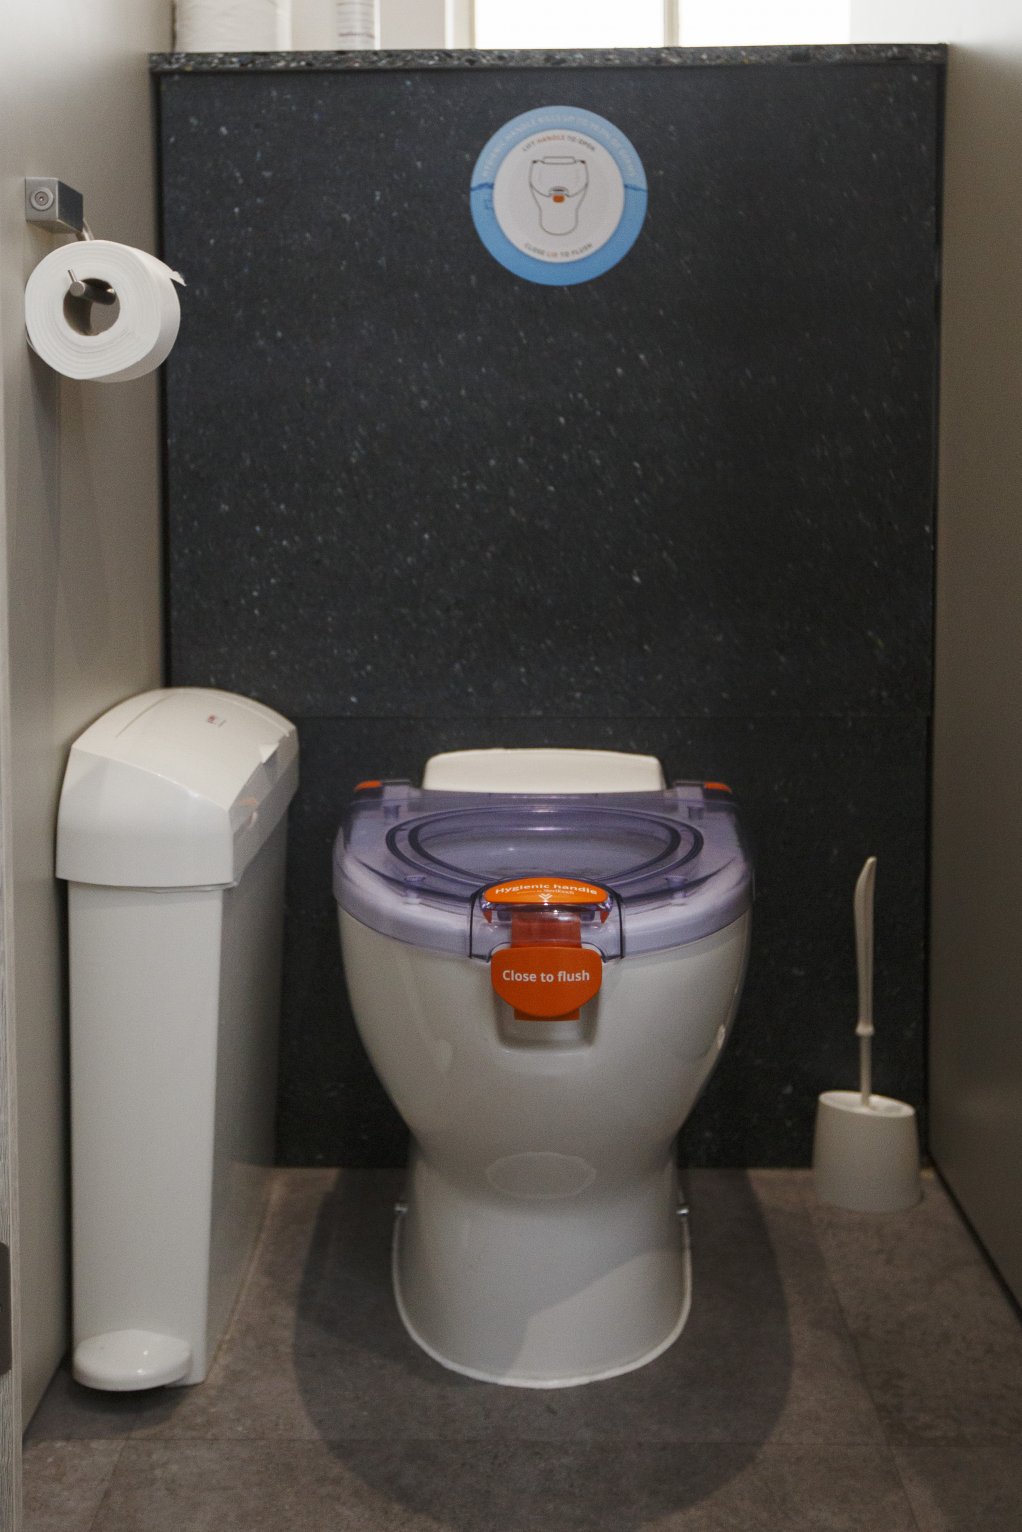 Hyprop to install water-saving toilets at shopping centres